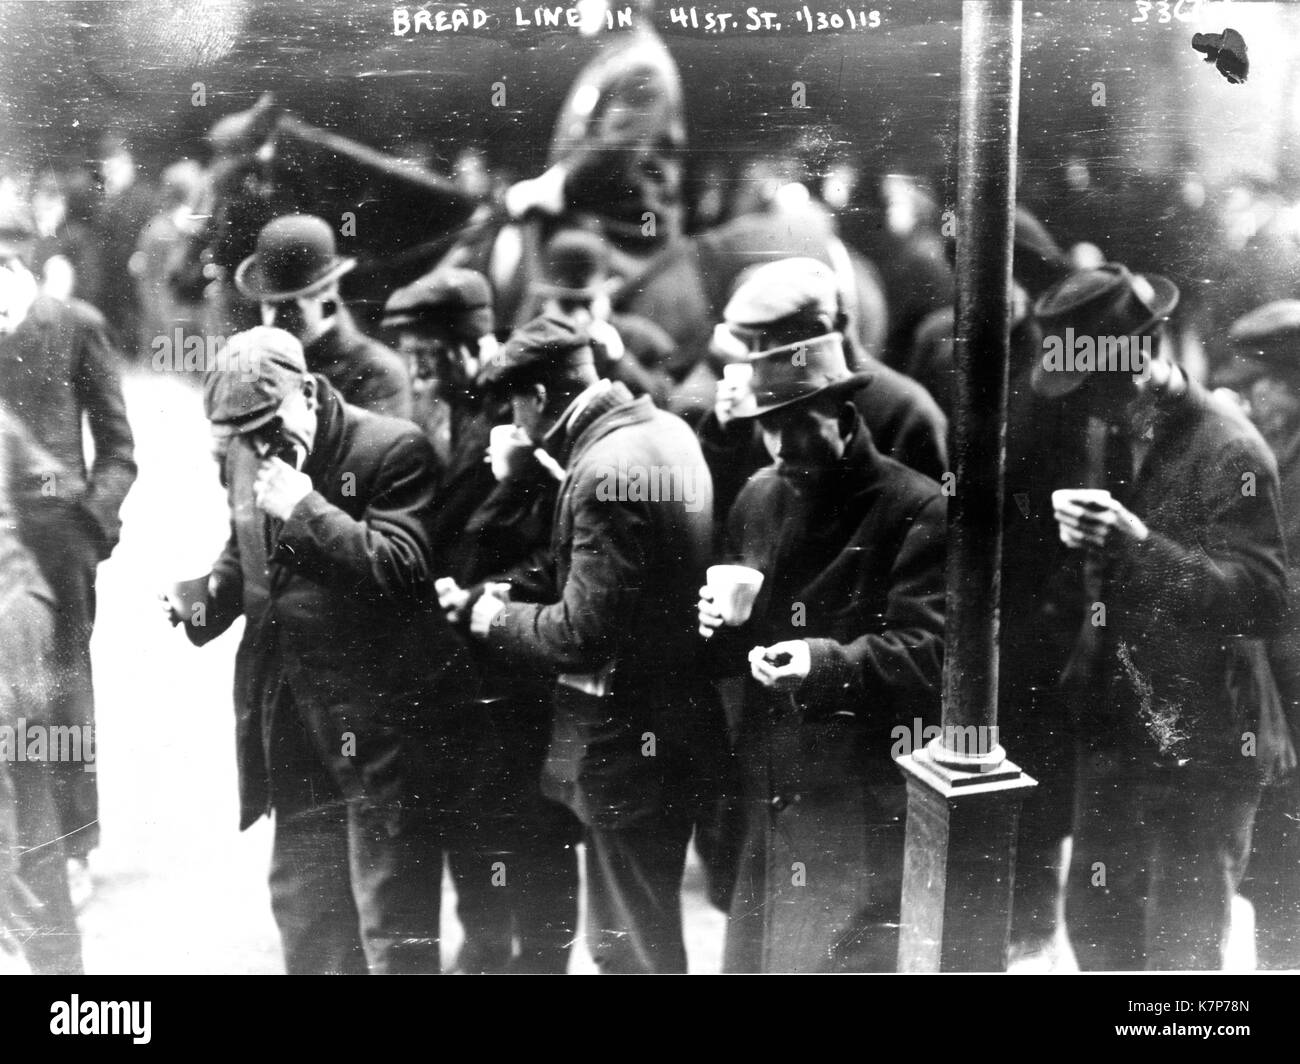 Bread Line feeding unemployed men coffee and donuts, Washington, DC, 01/30/1915. Stock Photo